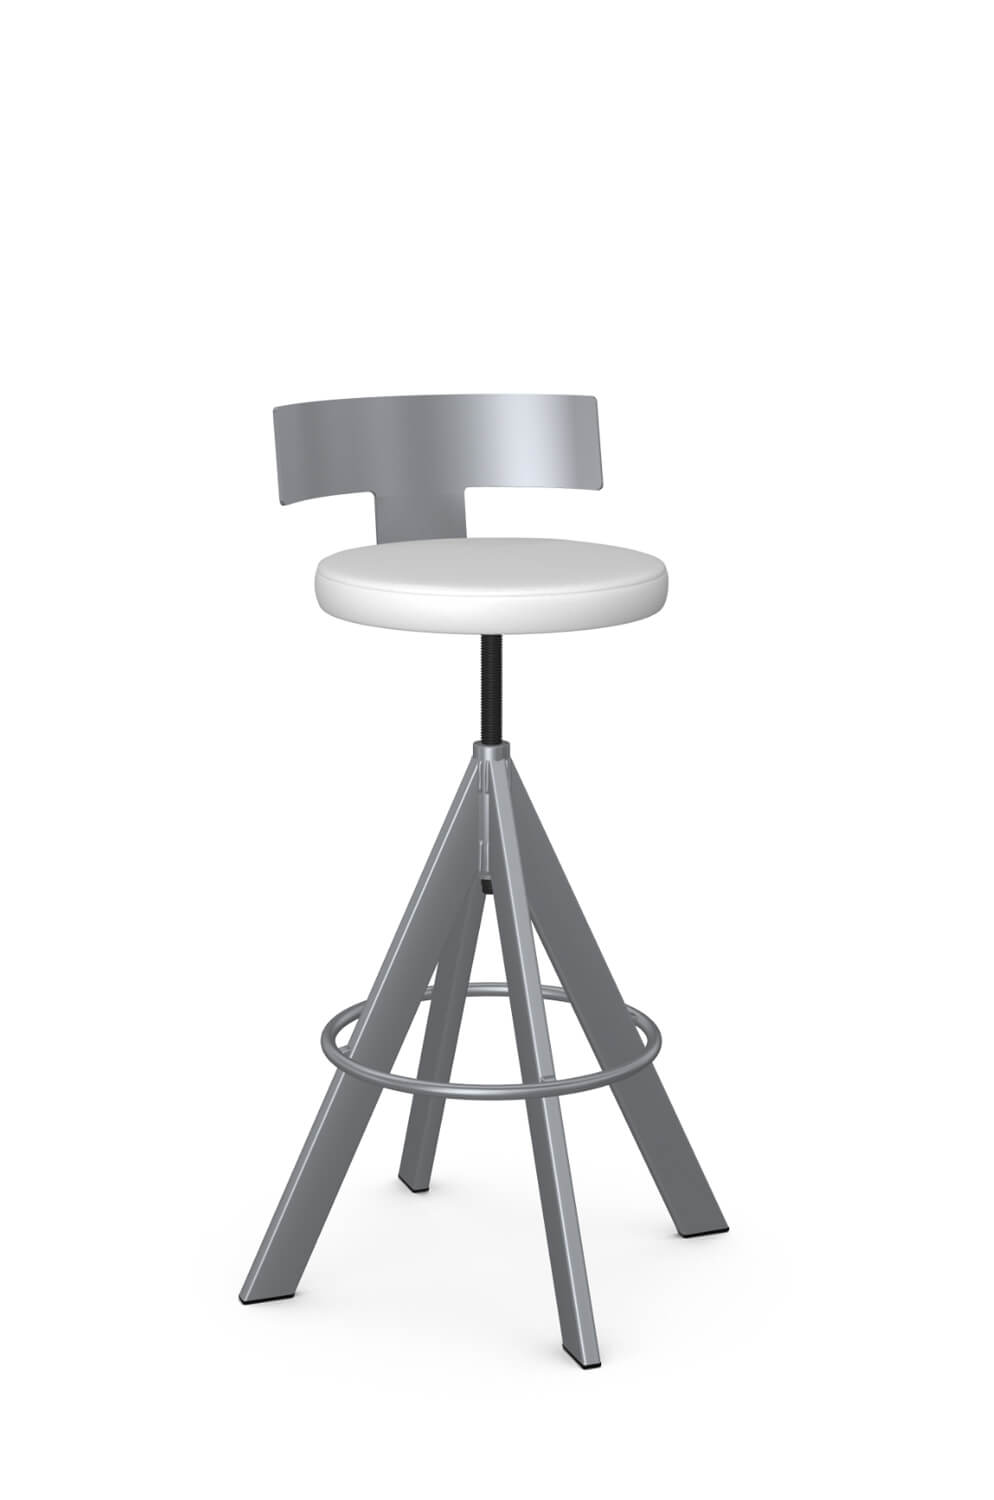 https://barstoolcomforts.com/wp-content/uploads/2020/05/amisco-uplift-modern-adjustable-swivel-stool-in-silver-metal-and-white-seat-cushion.jpg